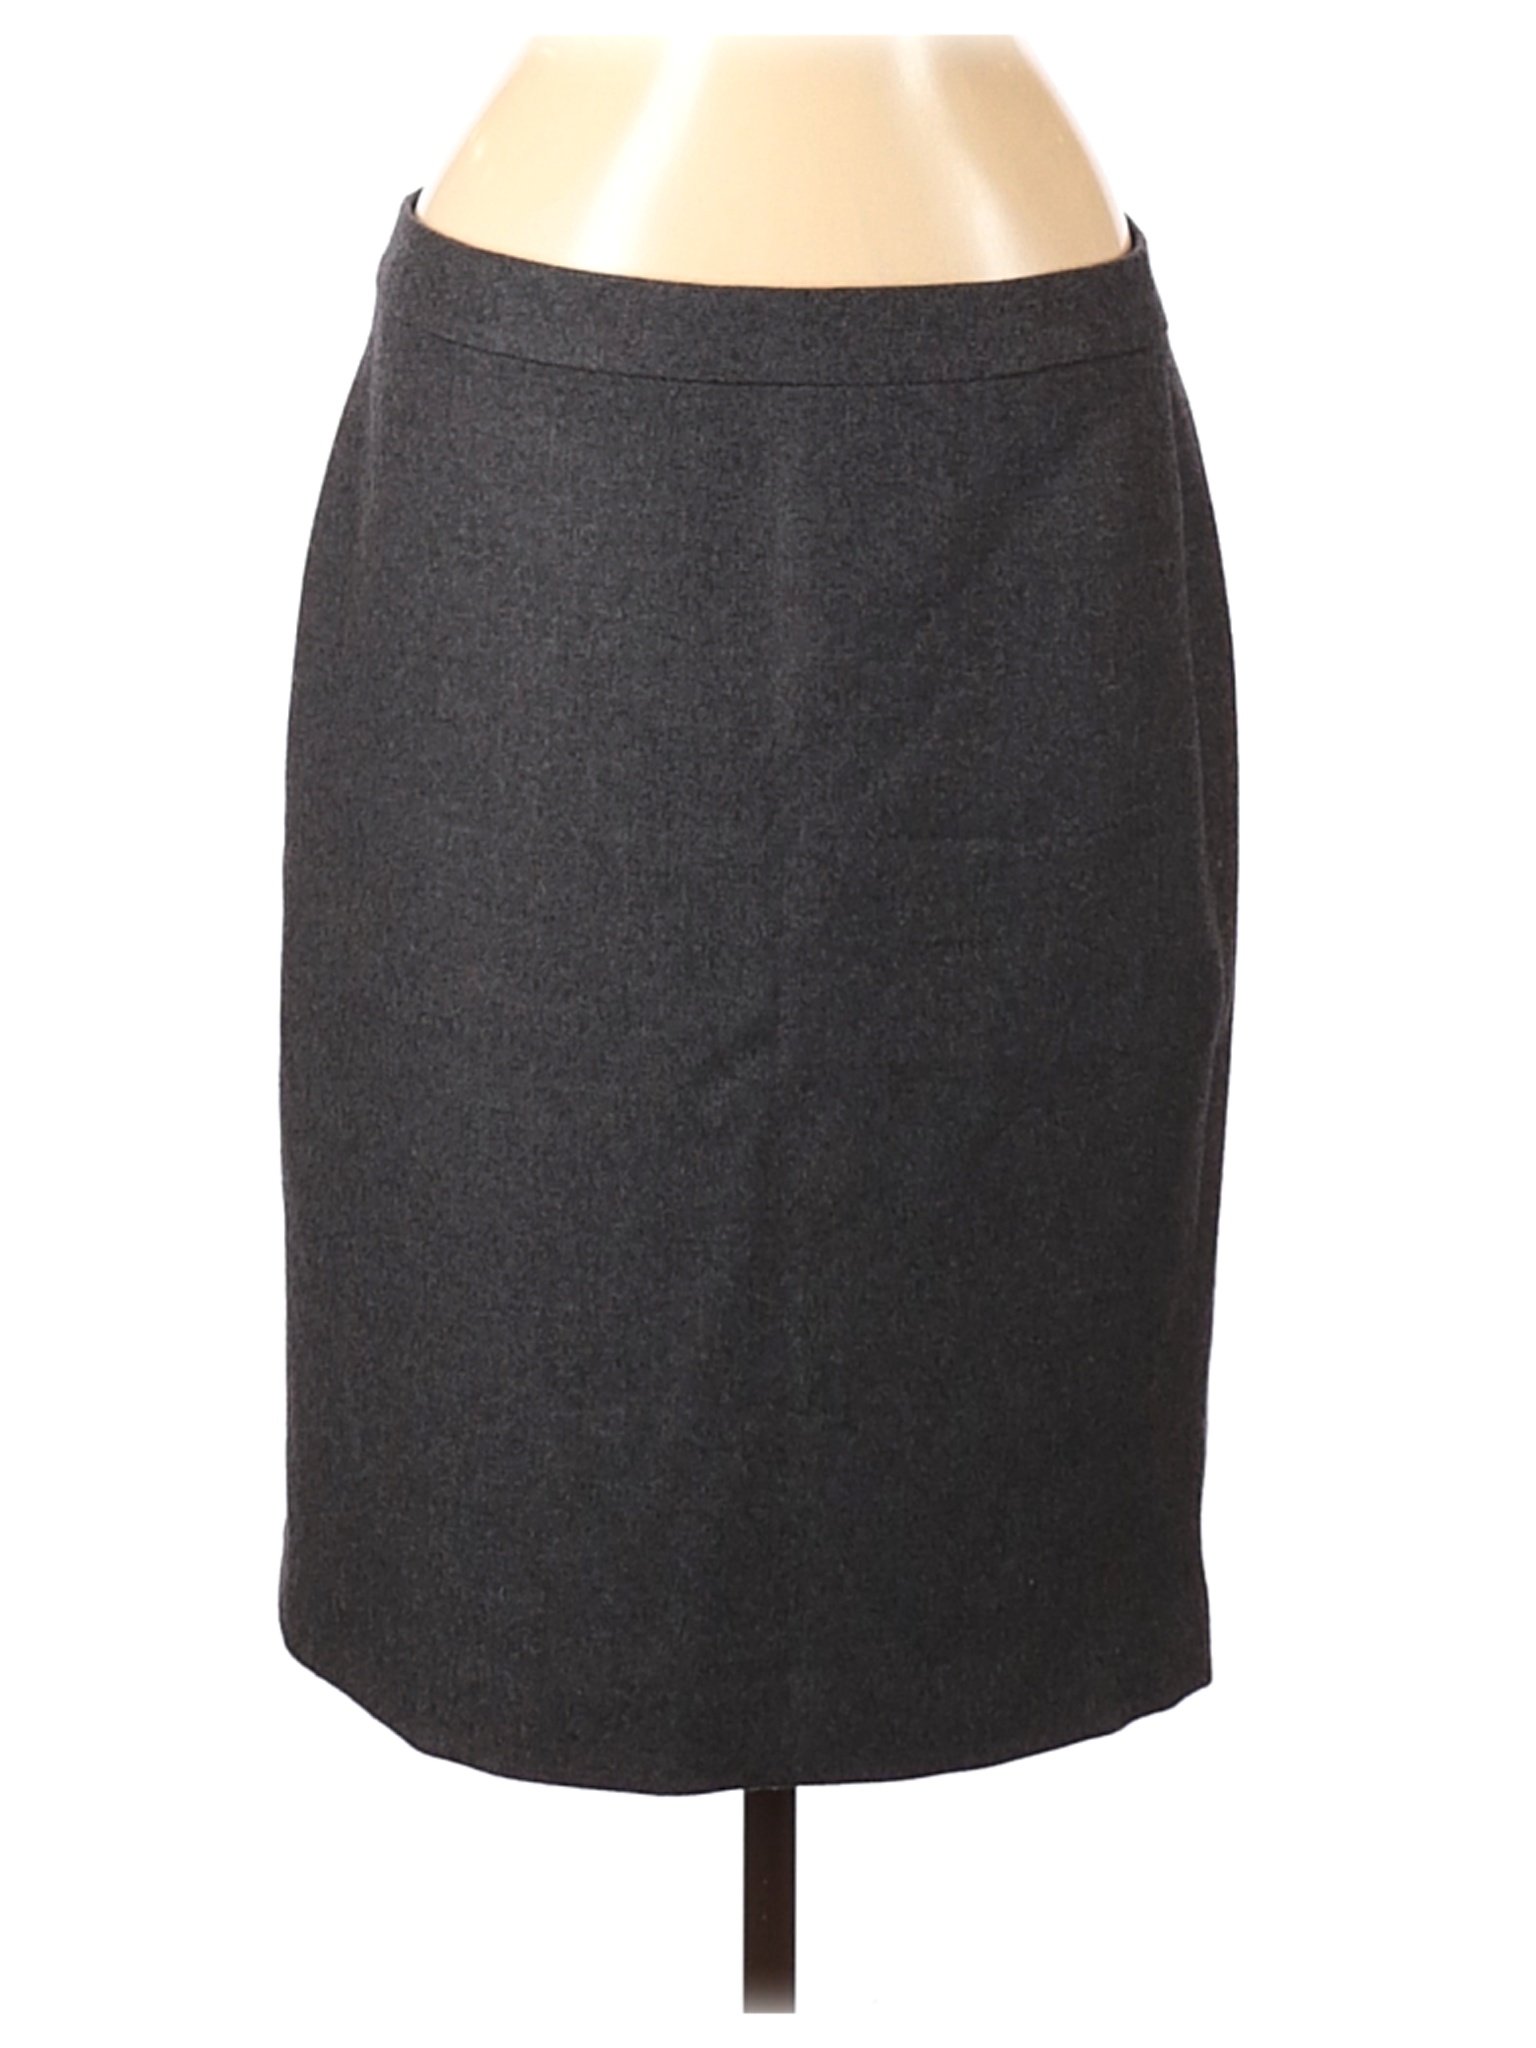 J.Crew Women Black Wool Skirt 8 | eBay